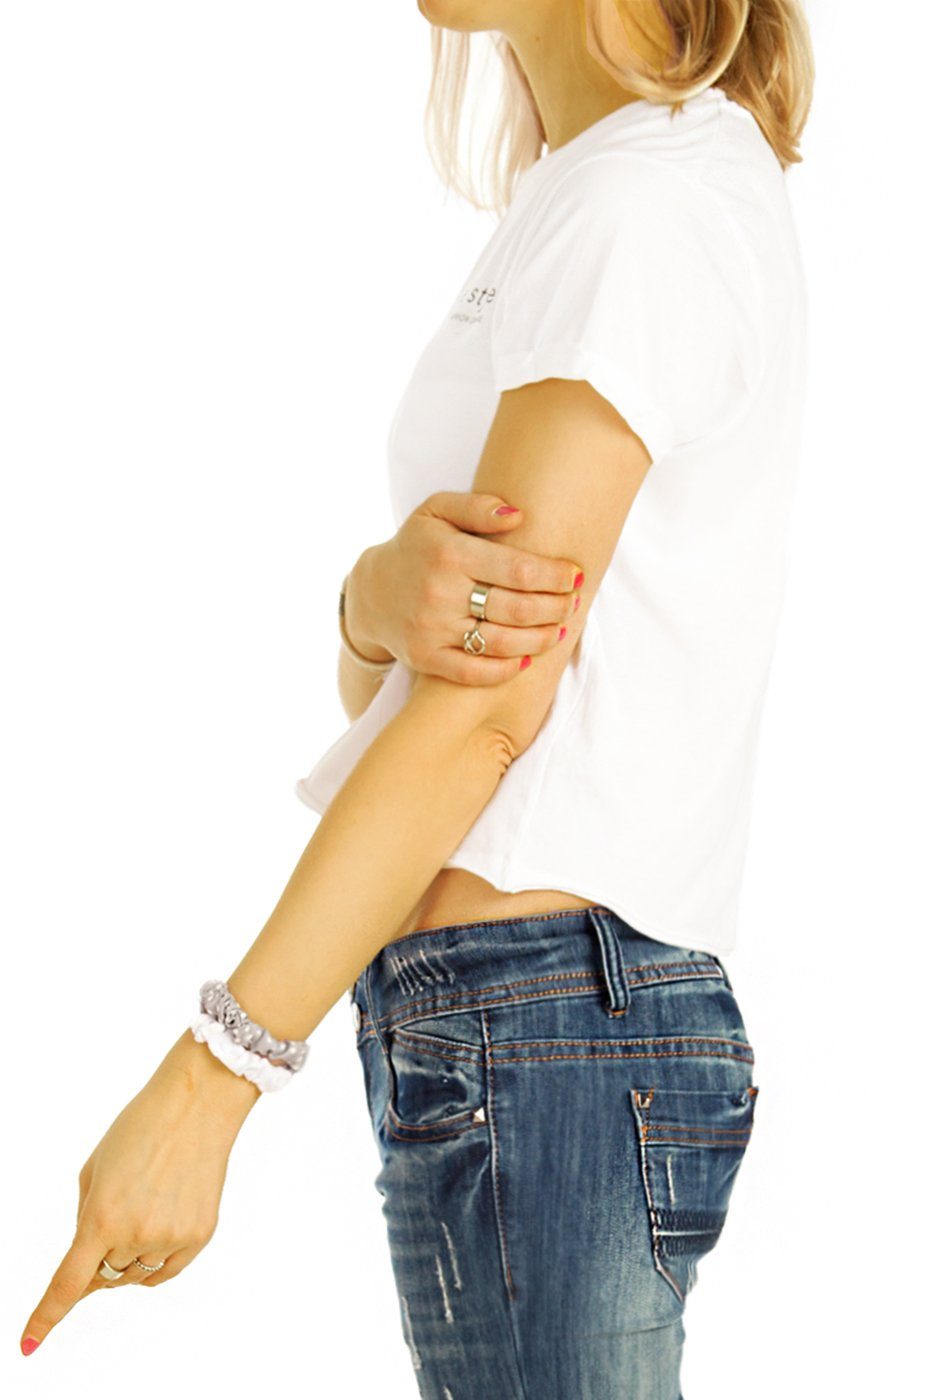 geschnittene 5-pocket Straight-Jeans gerade blau j137p-straight Damenjeans, styled be waist Hüfthose low